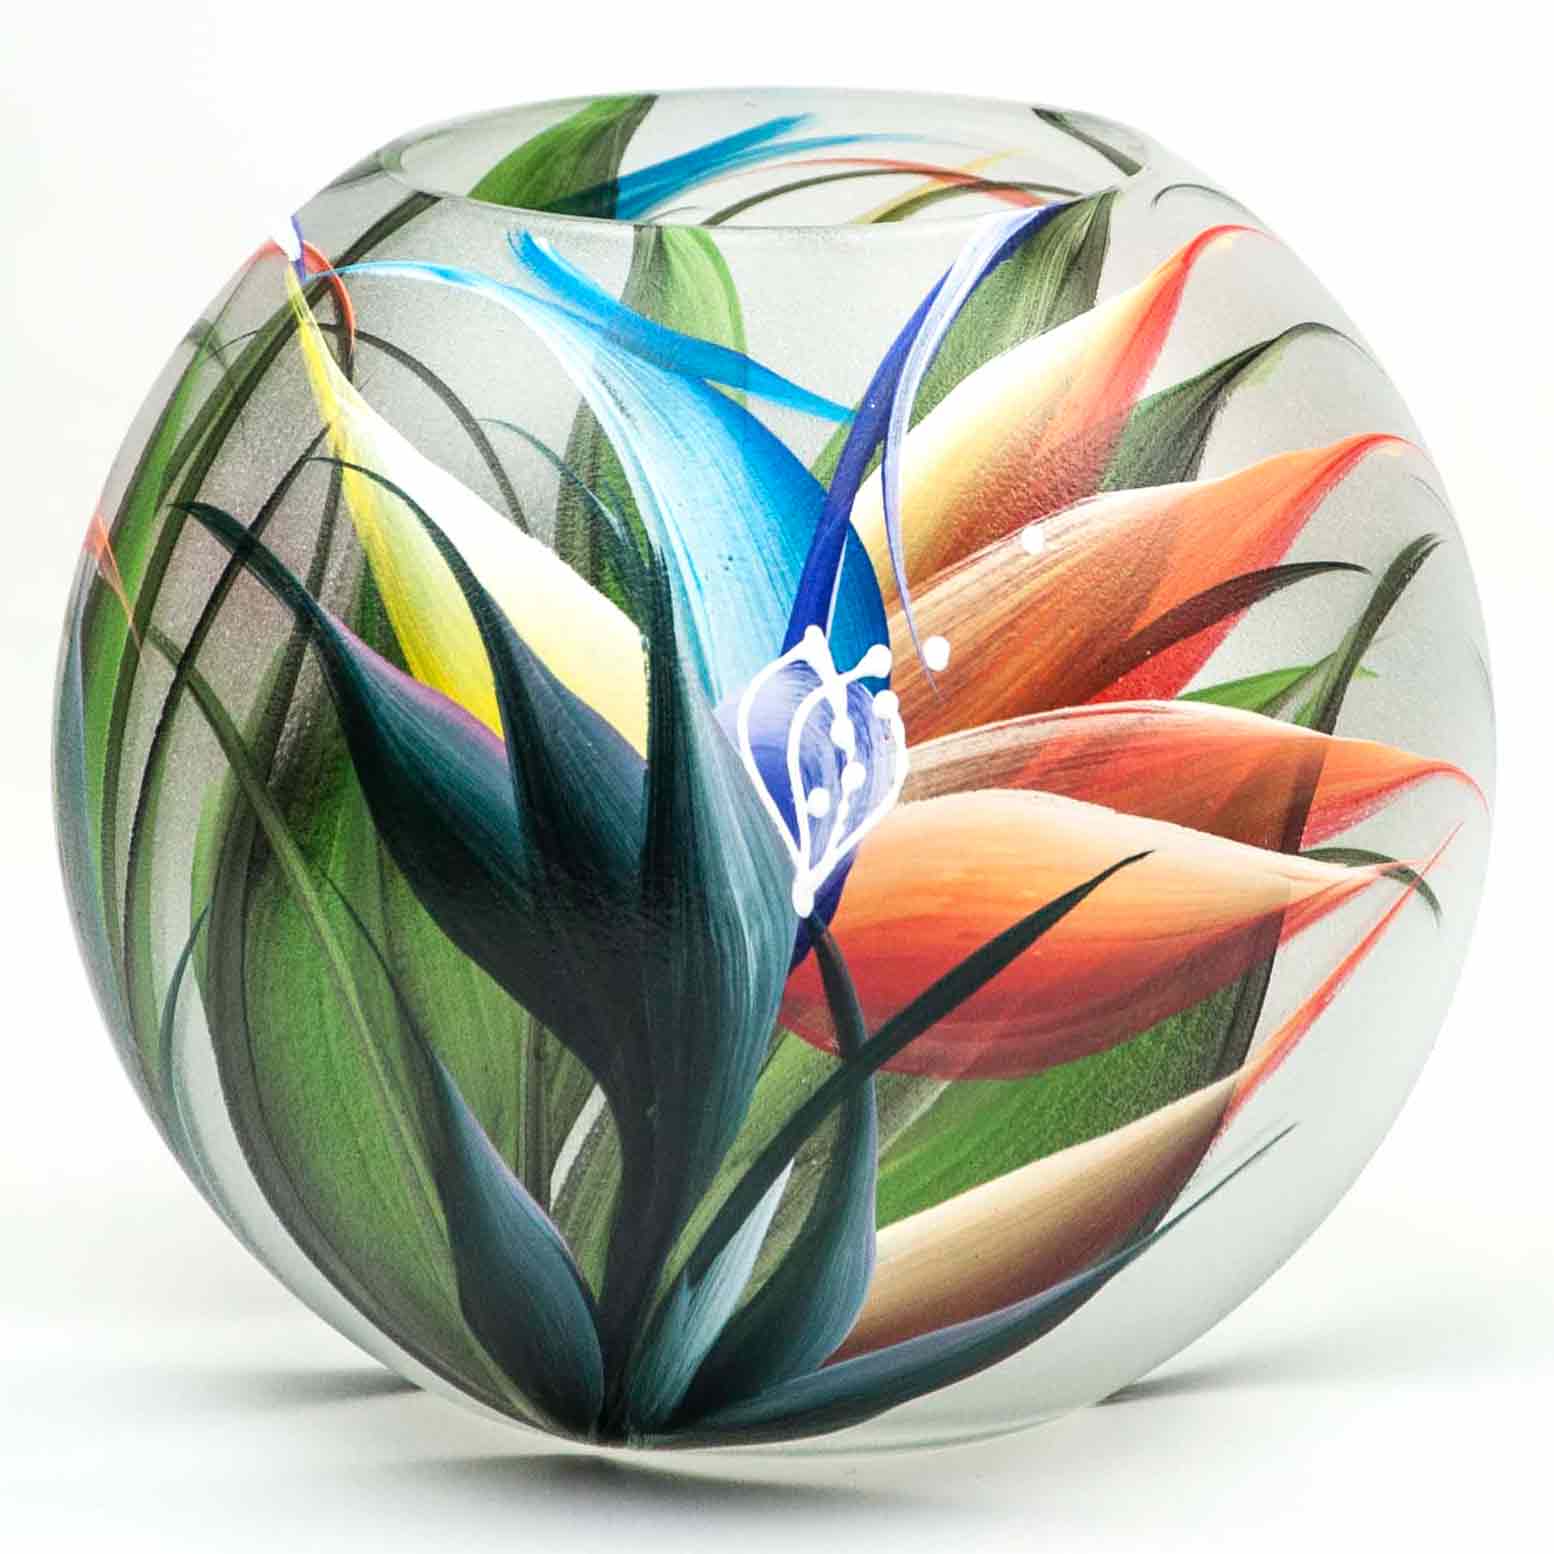 Handpainted Glass Vase for Flowers | Painted Art Glass Vase | Interior Design Home Room Decor | Table vase 6 in